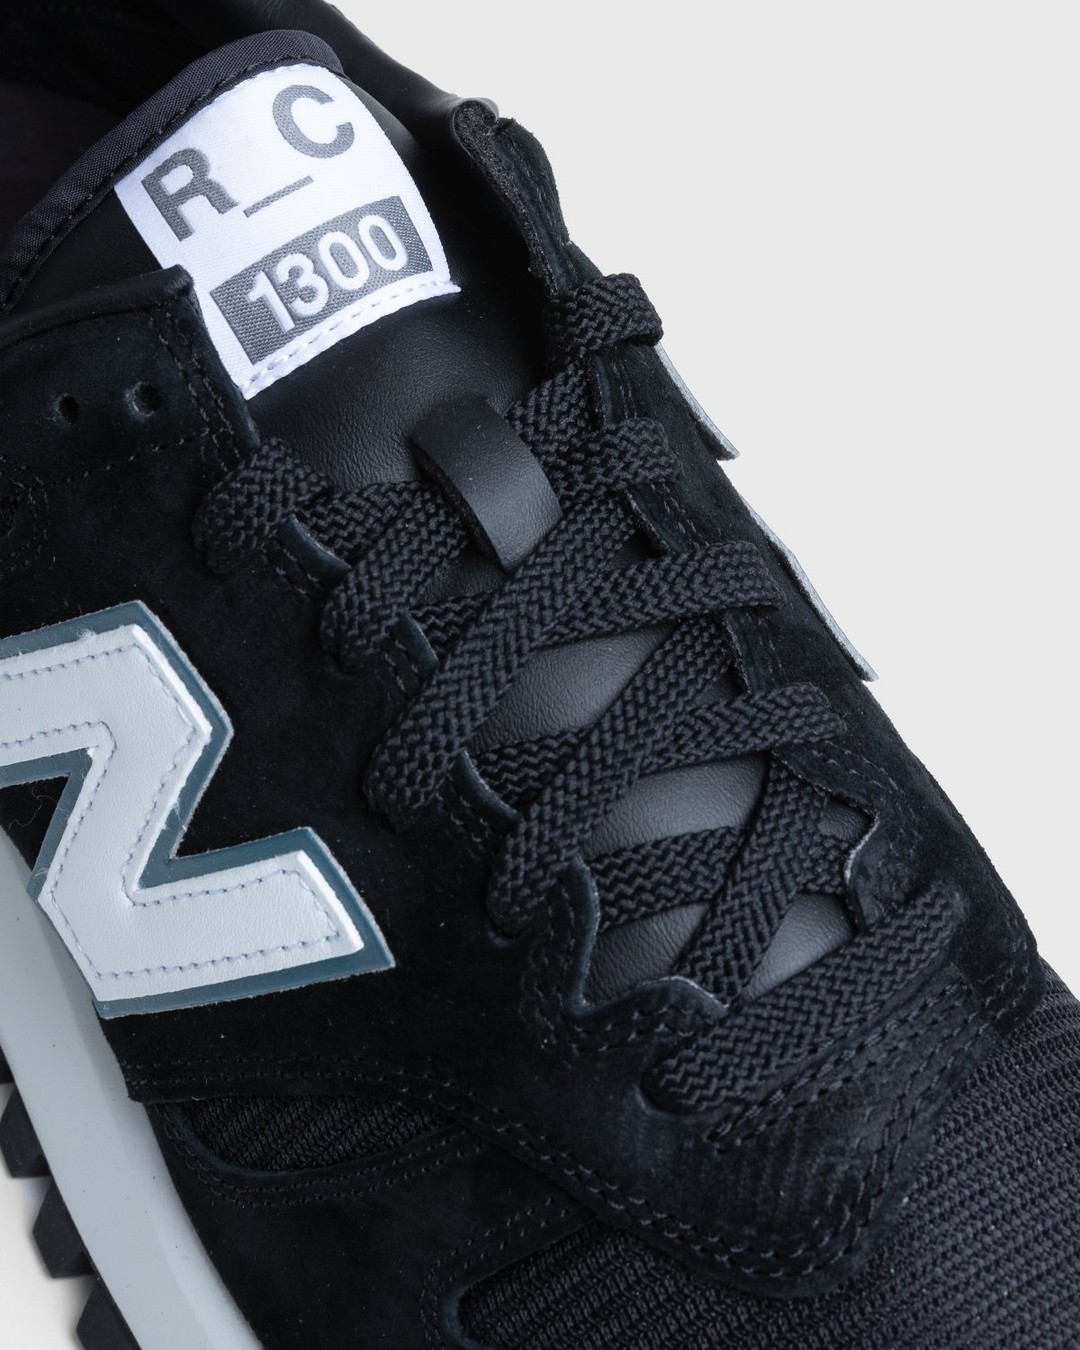 New Balance x Tokyo Design Studio – MS1300BG Black - Low Top Sneakers - Black - Image 5